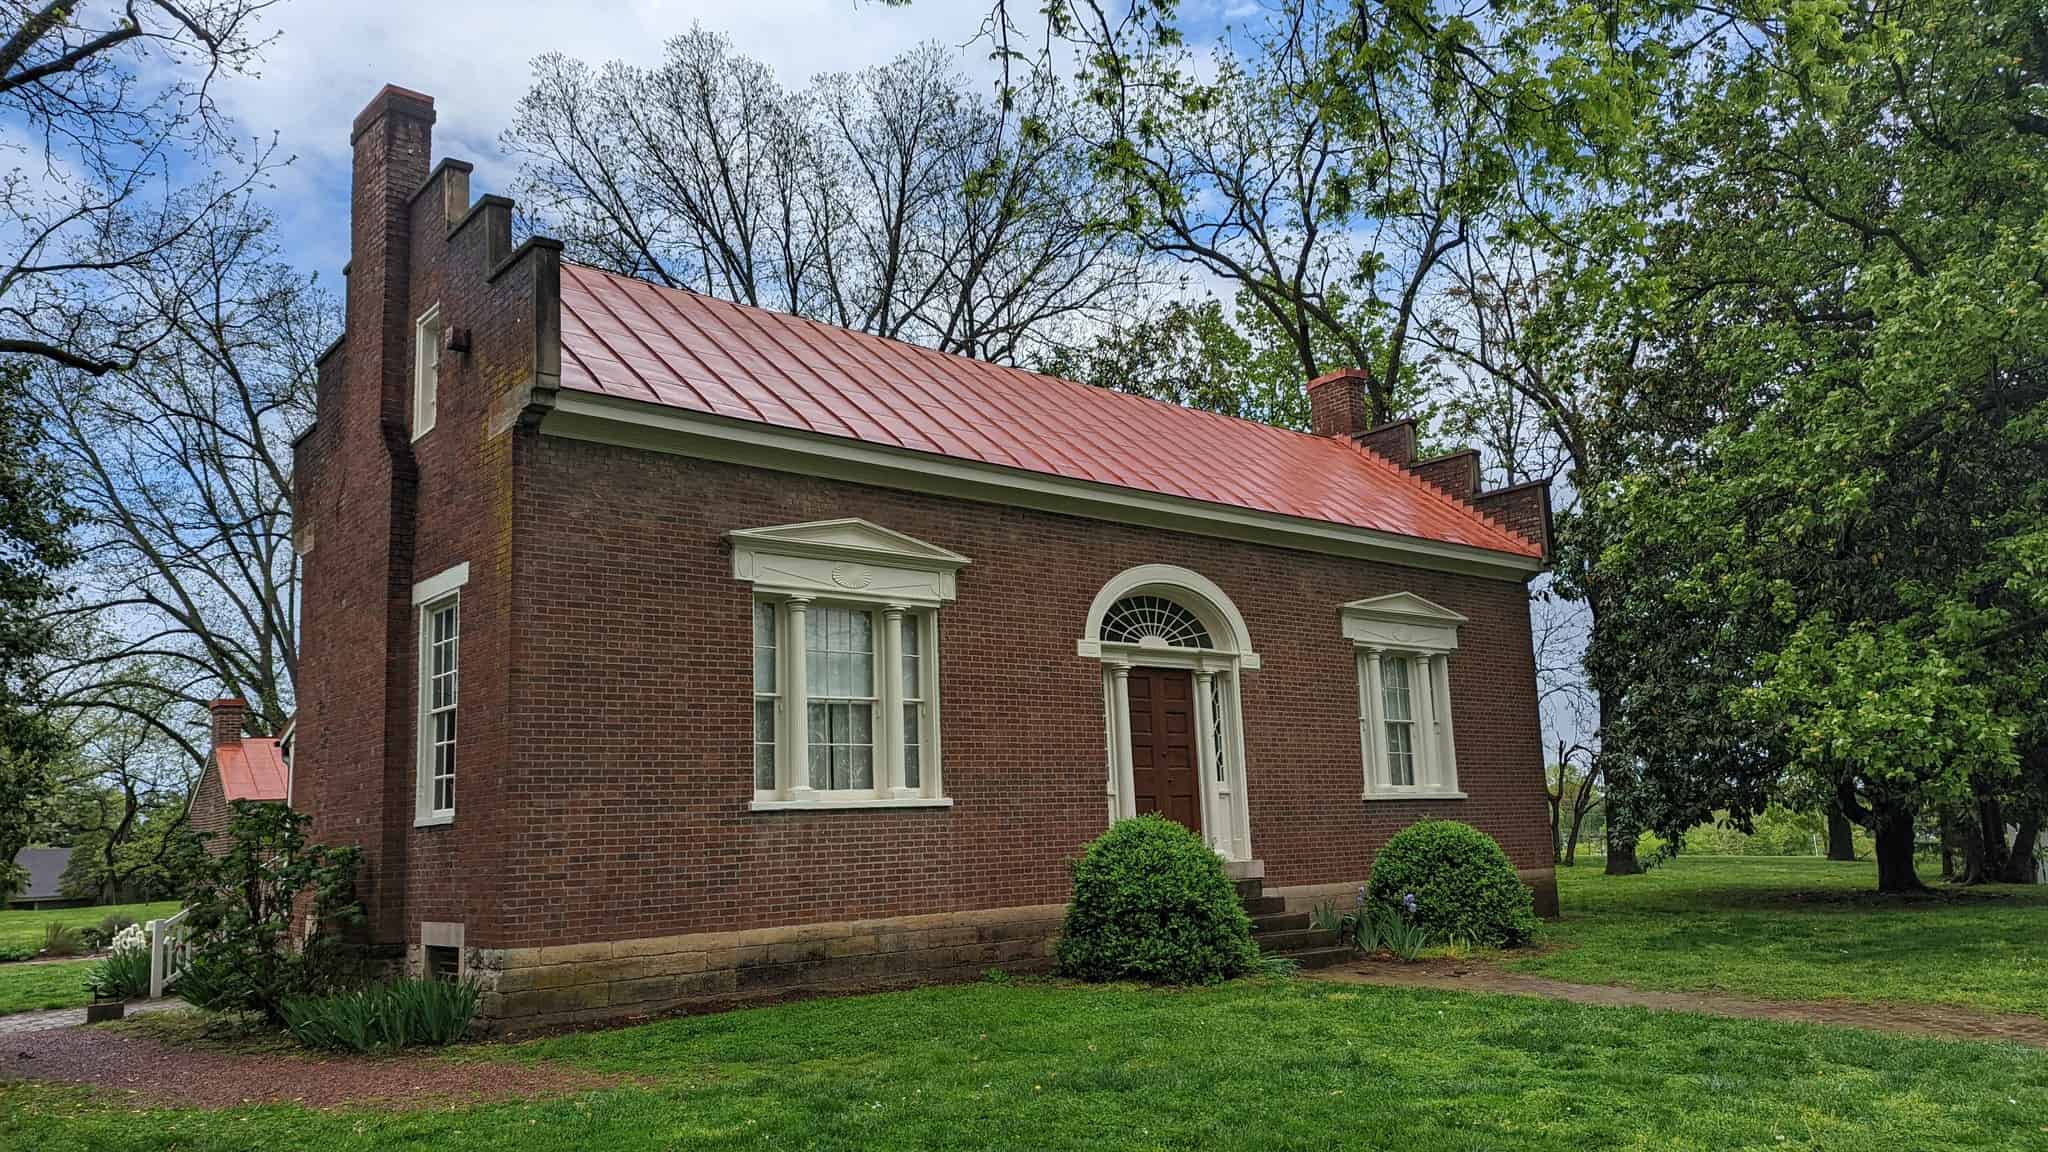 Battle Of Franklin - Civil War Museum